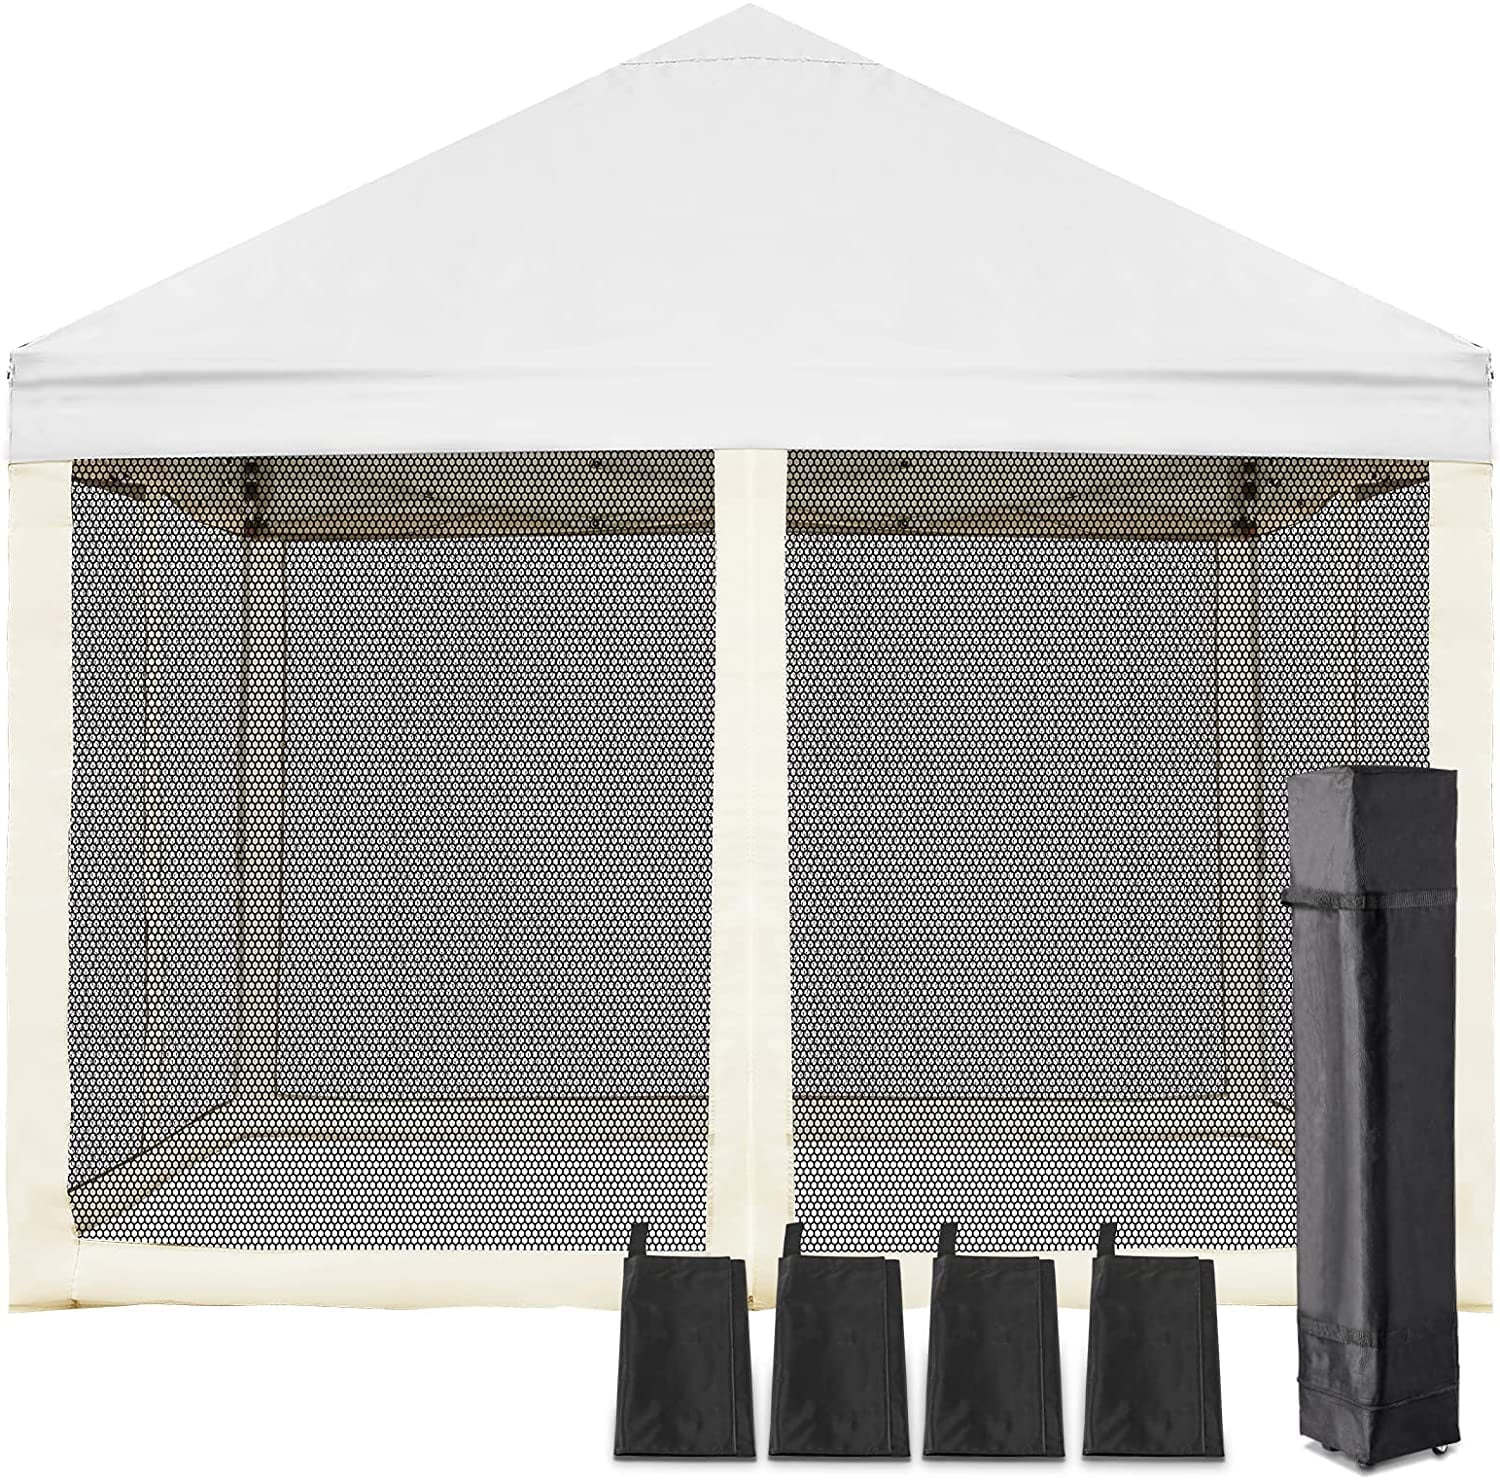 Arlopu 10' x 10' Pop up Canopy Tent with Mosquito Netting Screen Outdoor Folding Gazebo Camping Shelter